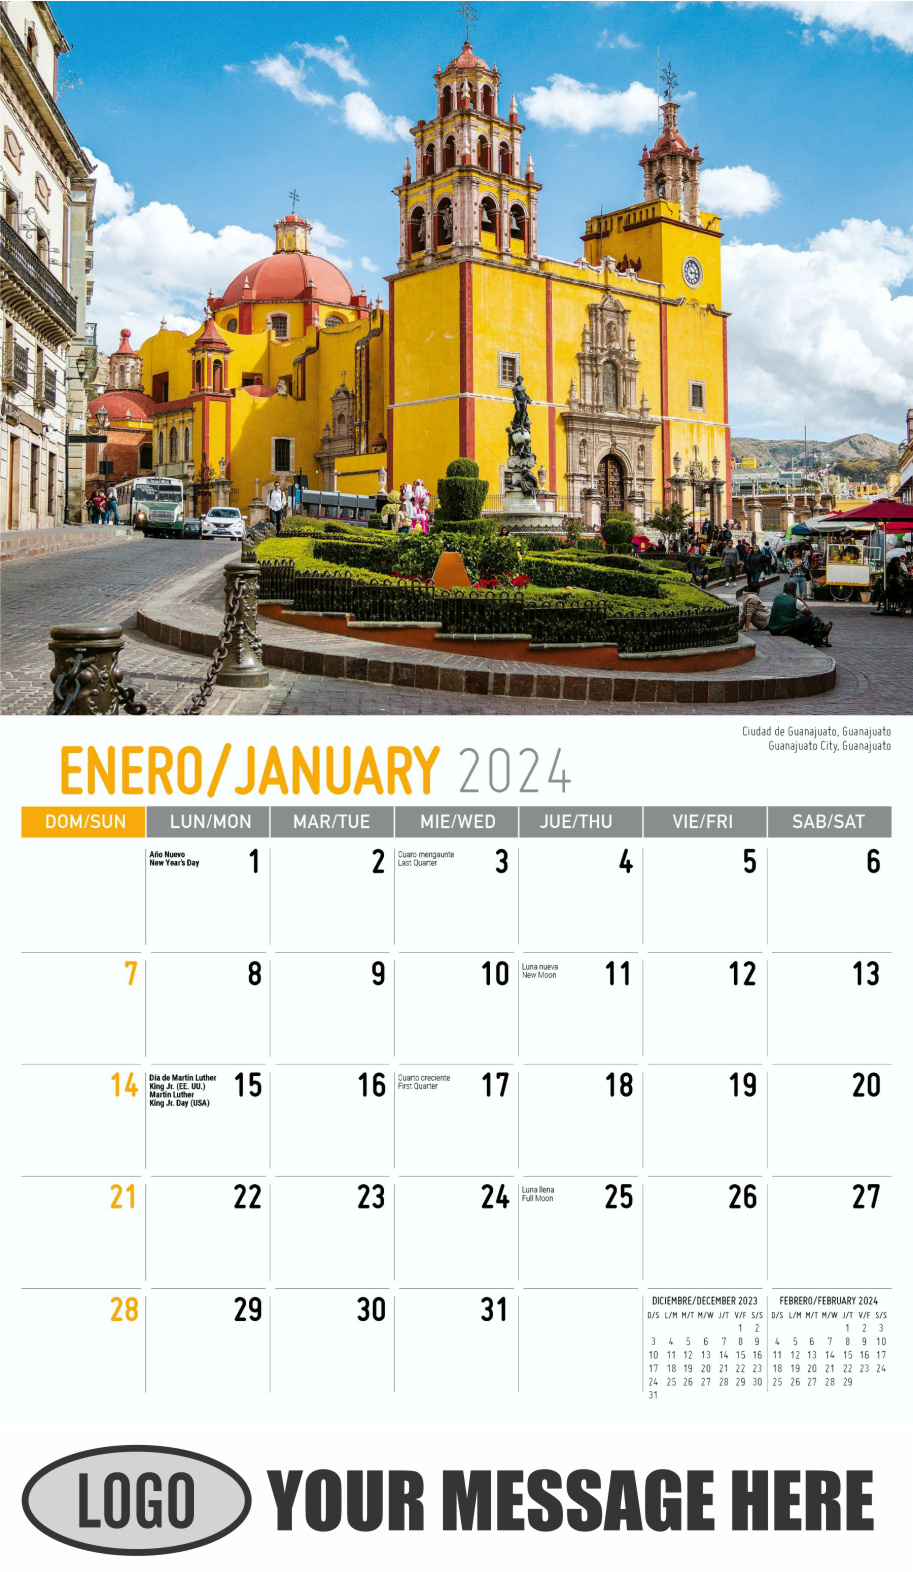 Scenes of Mexico 2024 Bilingual Business Promo Calendar - January